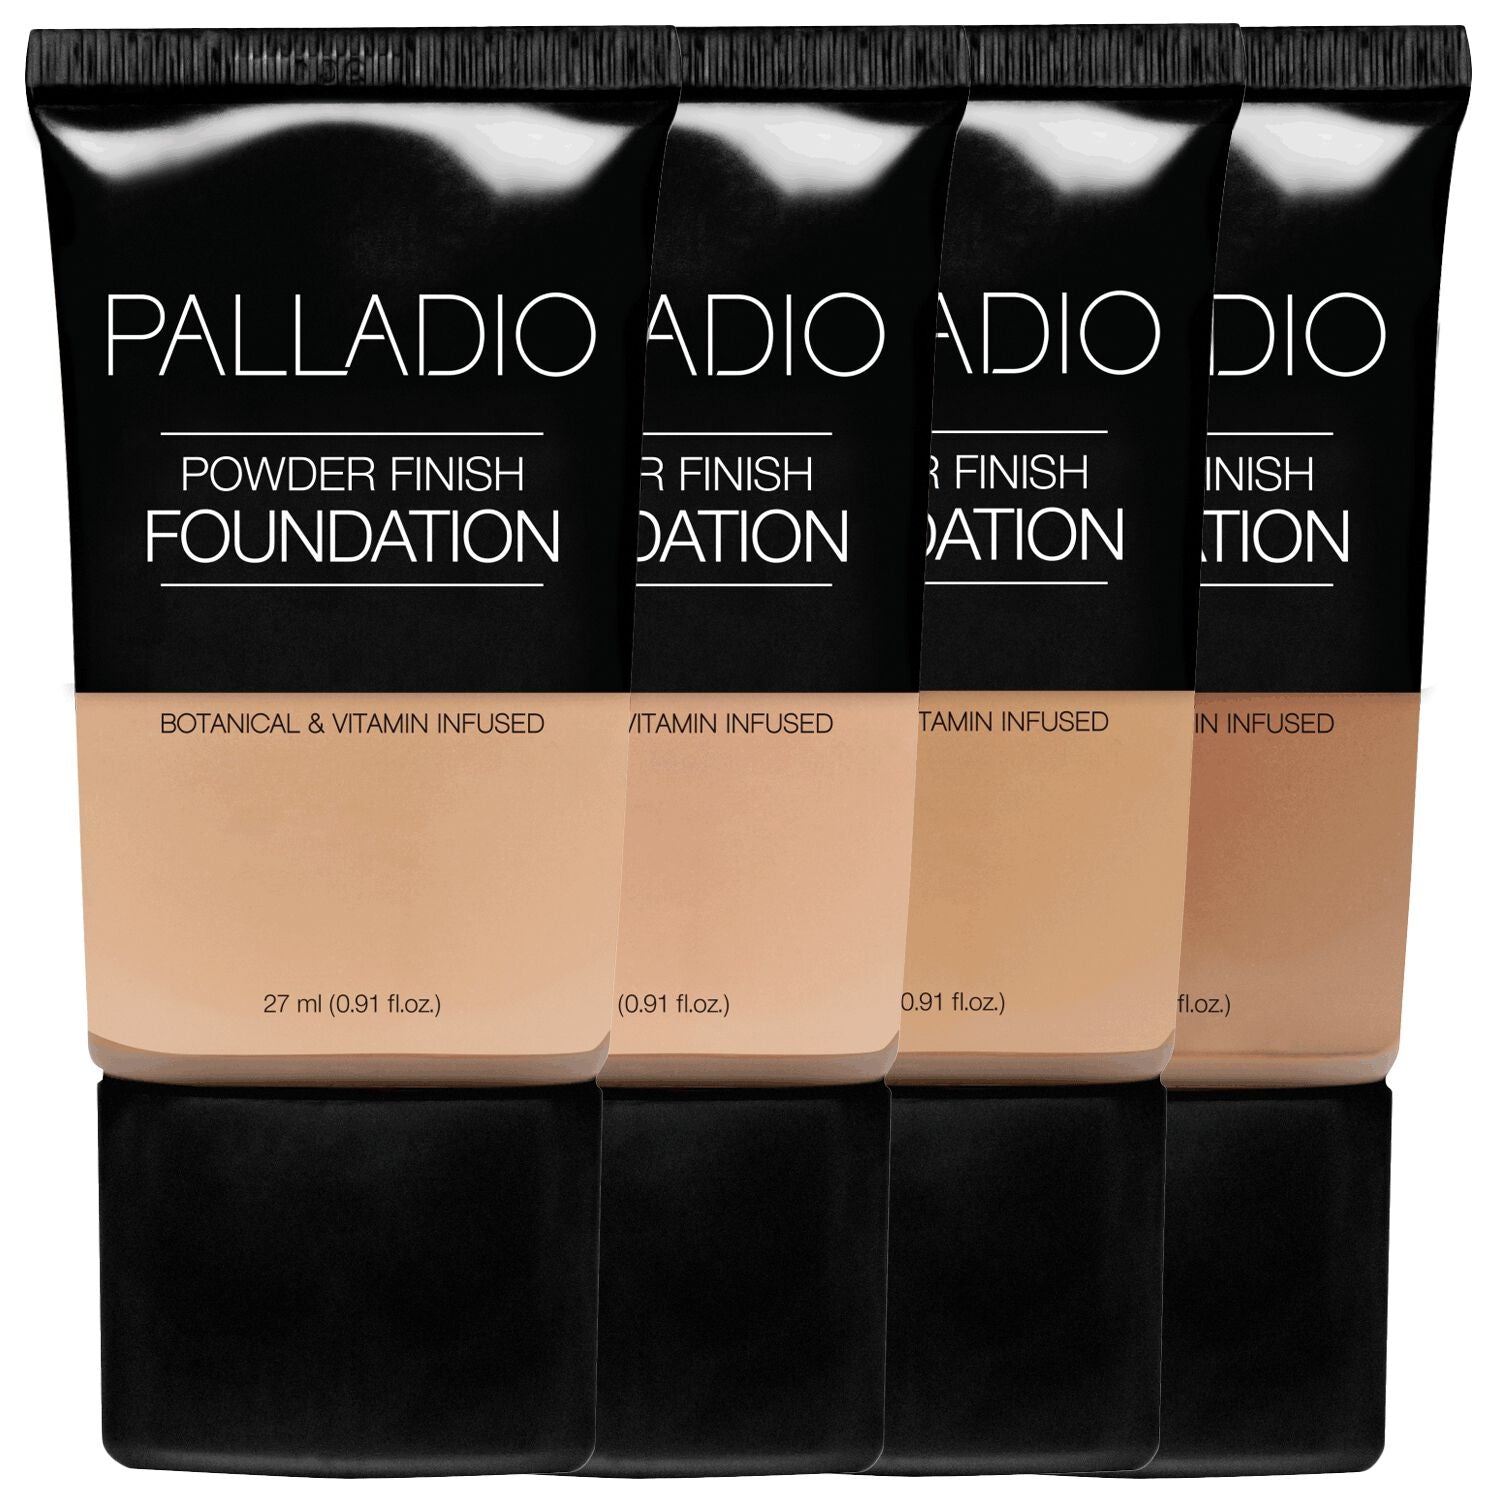 Palladio Powder Finish Foundation